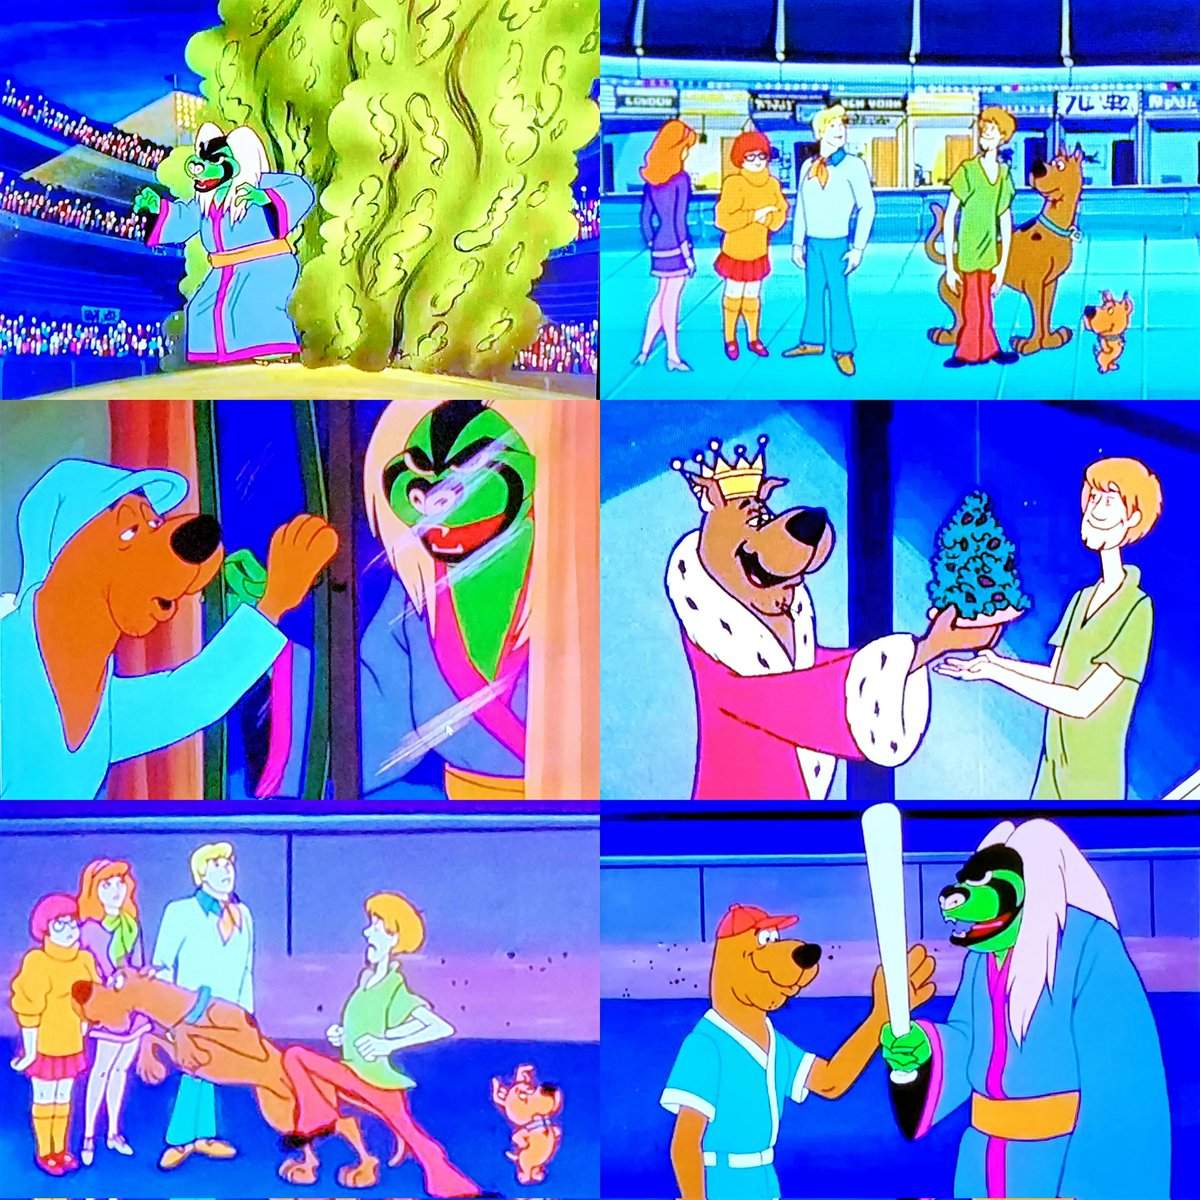 #SaturdayMorningCartoon time!😊

#NowWatching
Scooby-Doo & Scrappy-Doo🔎🐾
S01E07 Nov 3rd, 1979🗓📺

'The Demon of the Dugout'⚾️🧢😱
EP set in Tokyo 🇯🇵

#ScoobyDoo #ScrappyDoo #ShaggyRogers #VelmaDinkley #DaphneBlake #FredJones #HannaBarbera #Animation #TVSeries #Retro #Nostalgia